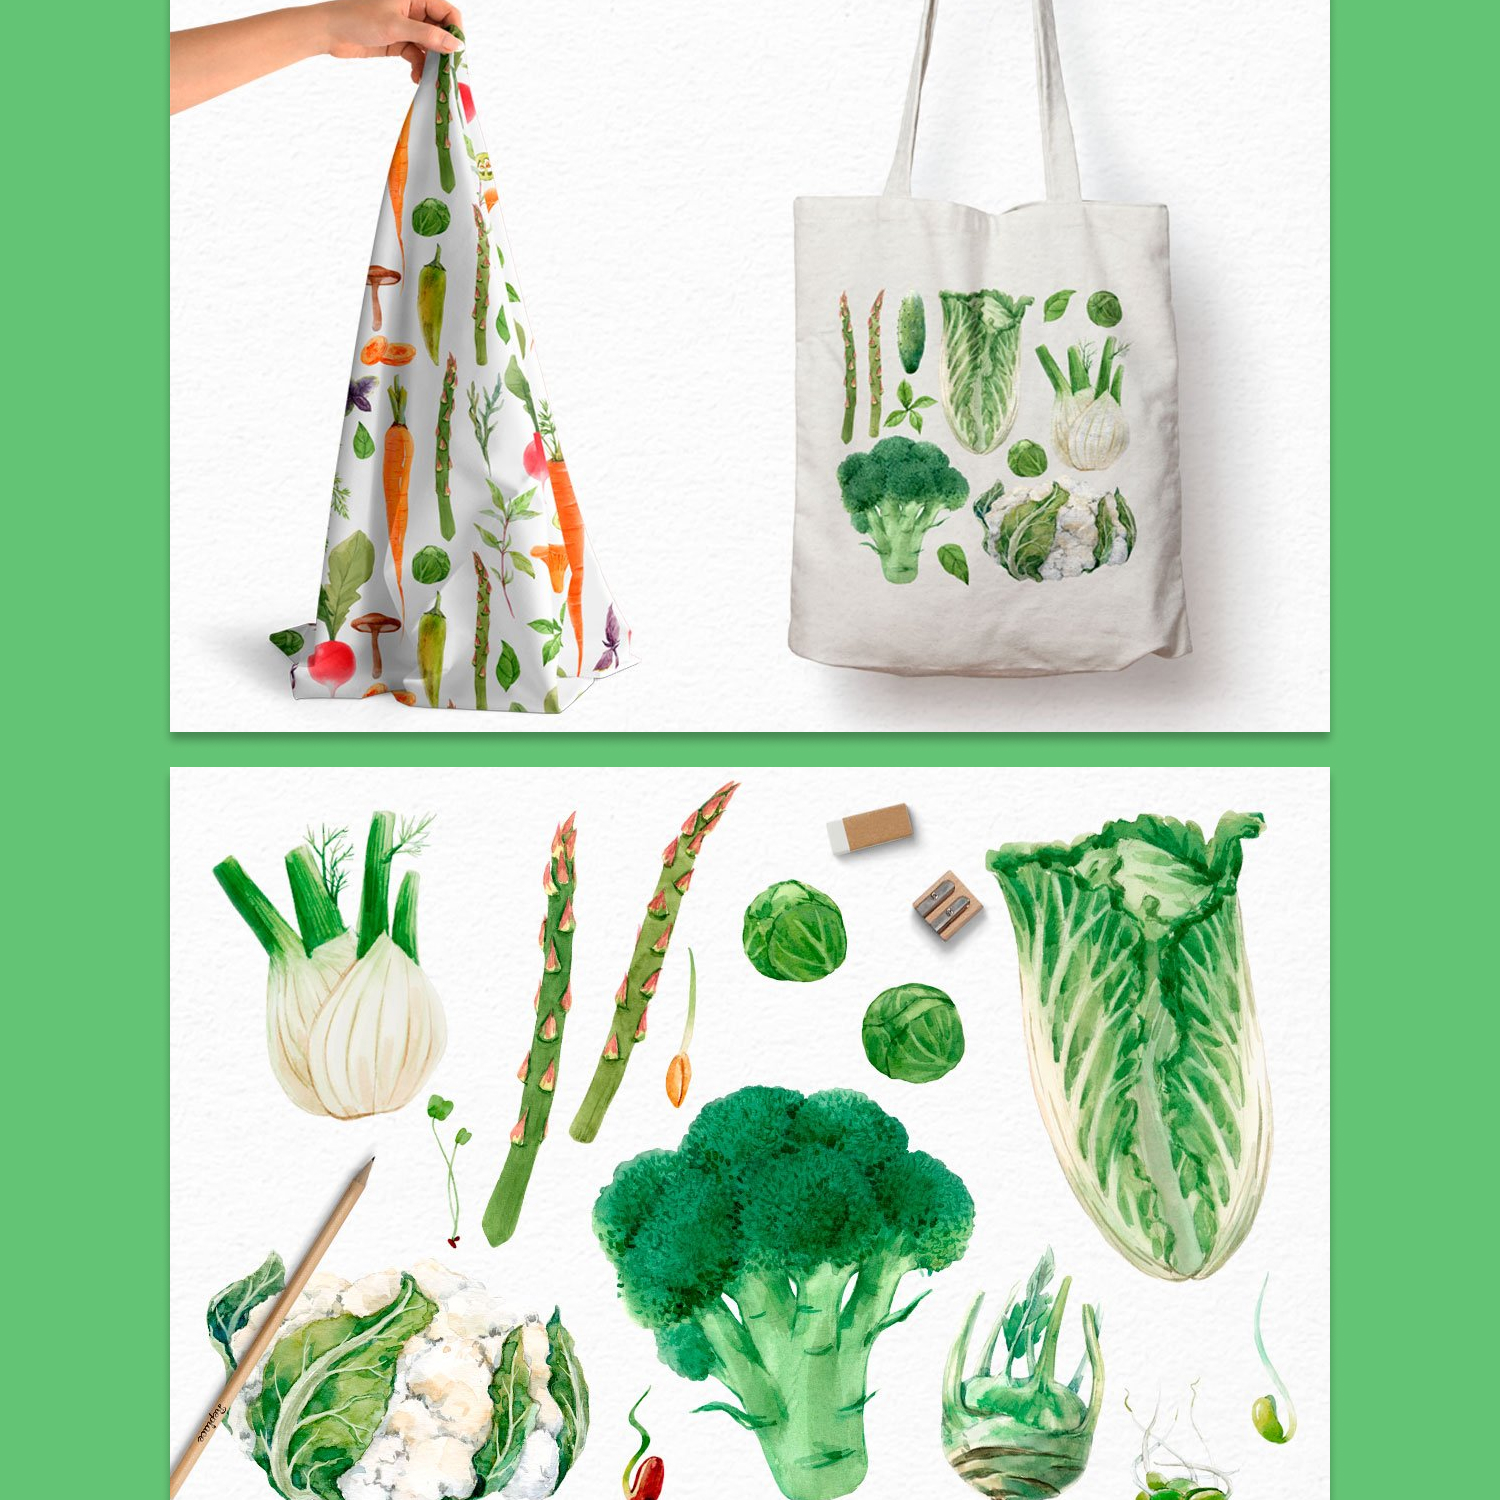 "Vegetables" PNG set created by Lembrik's Artworks.